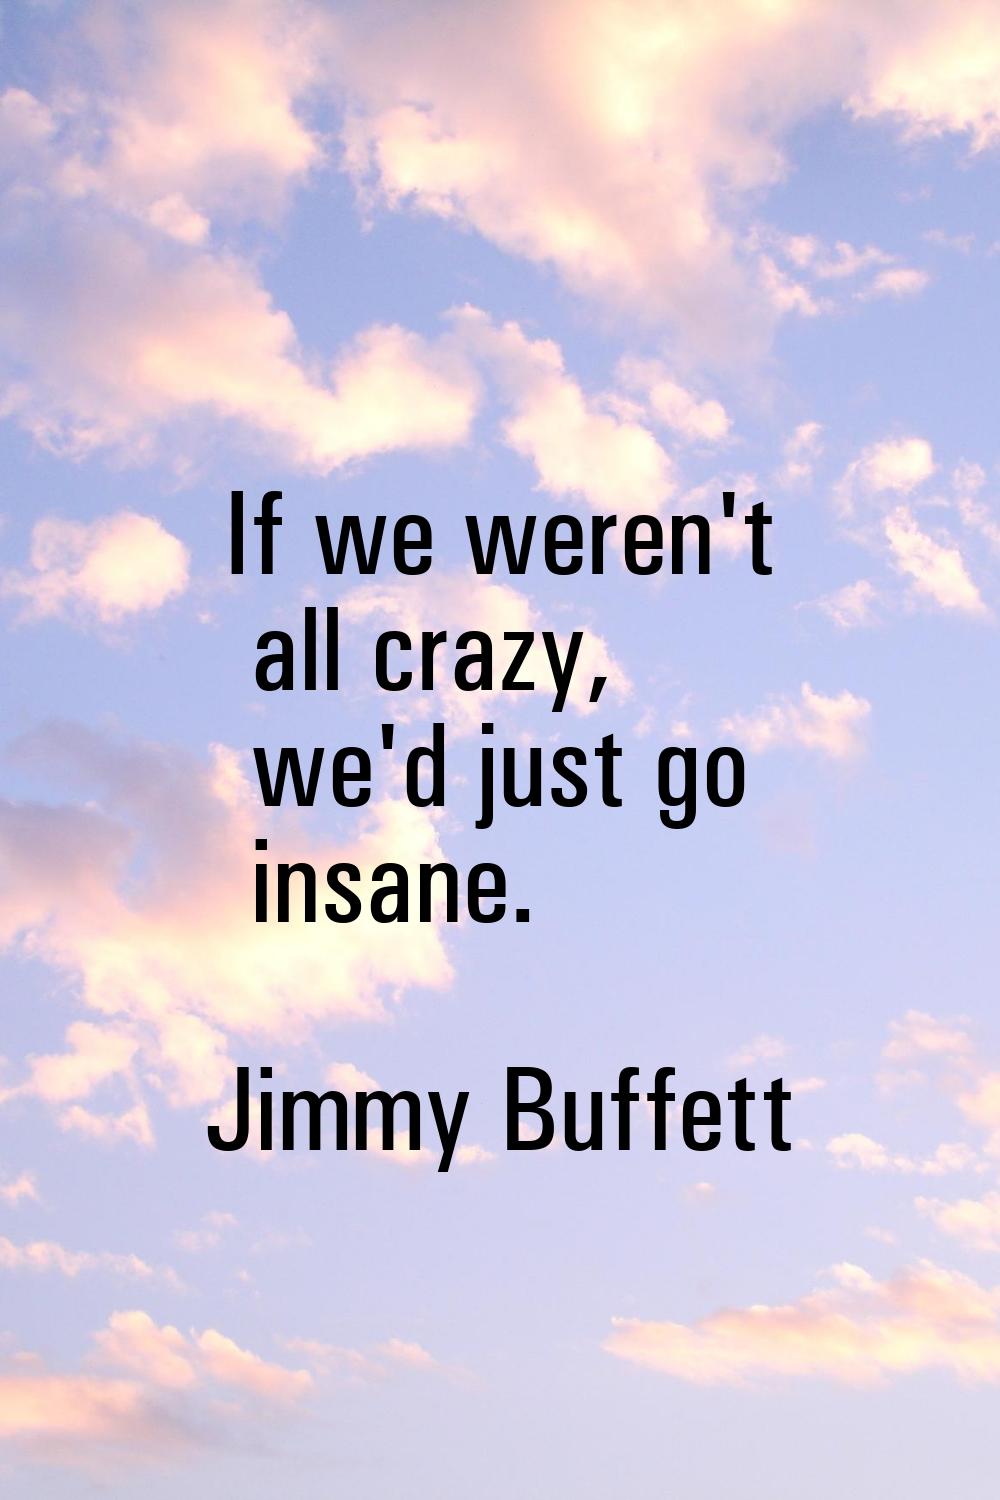 If we weren't all crazy, we'd just go insane.